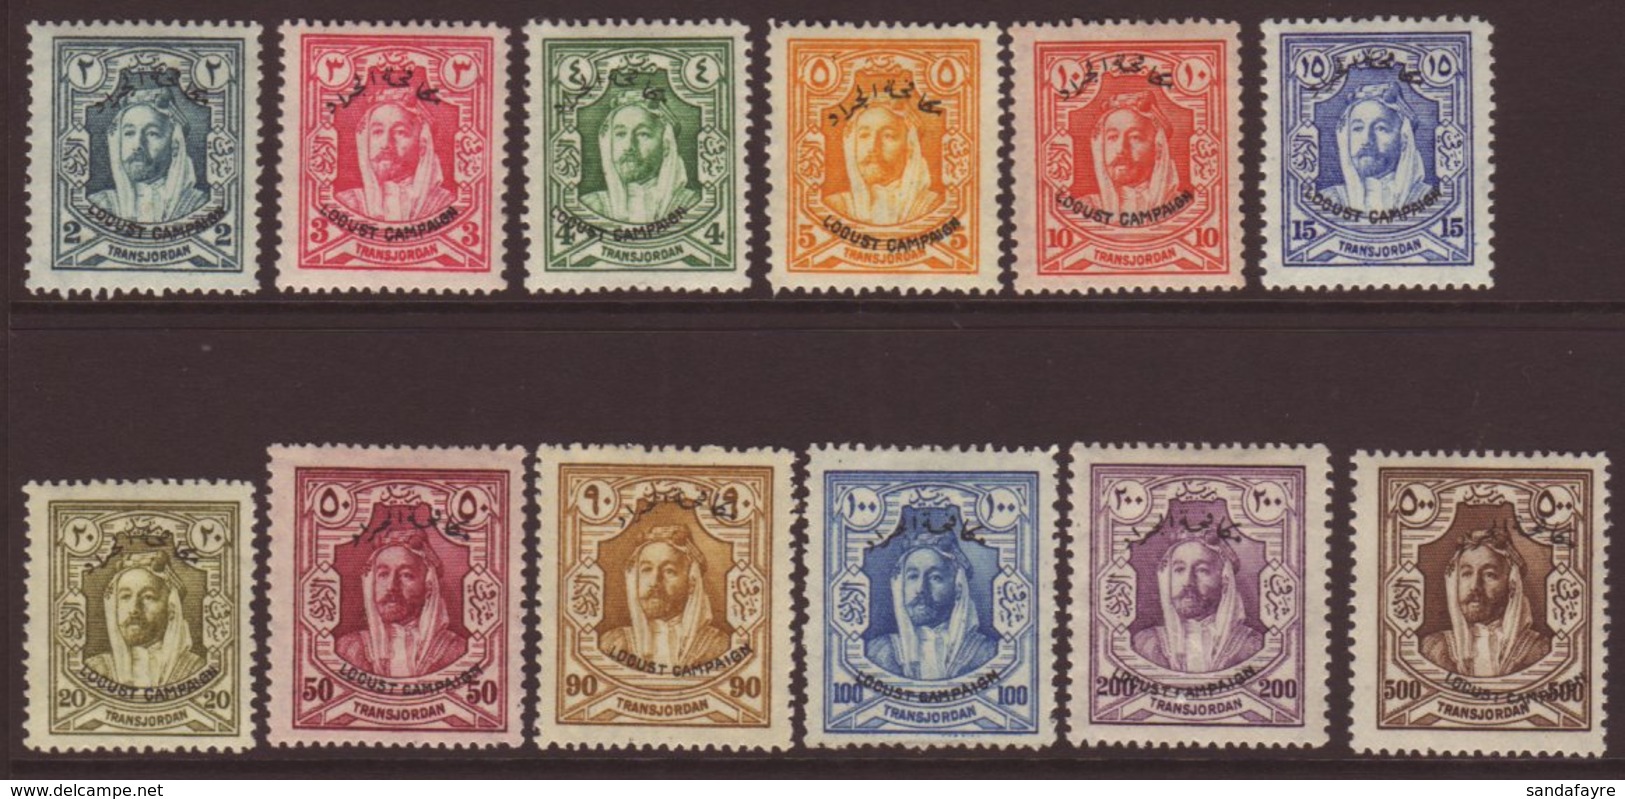 1930 Locust Campaign Overprints Complete Set, SG 183/94, Very Fine Mint, Fresh. (12 Stamps) For More Images, Please Visi - Jordanie